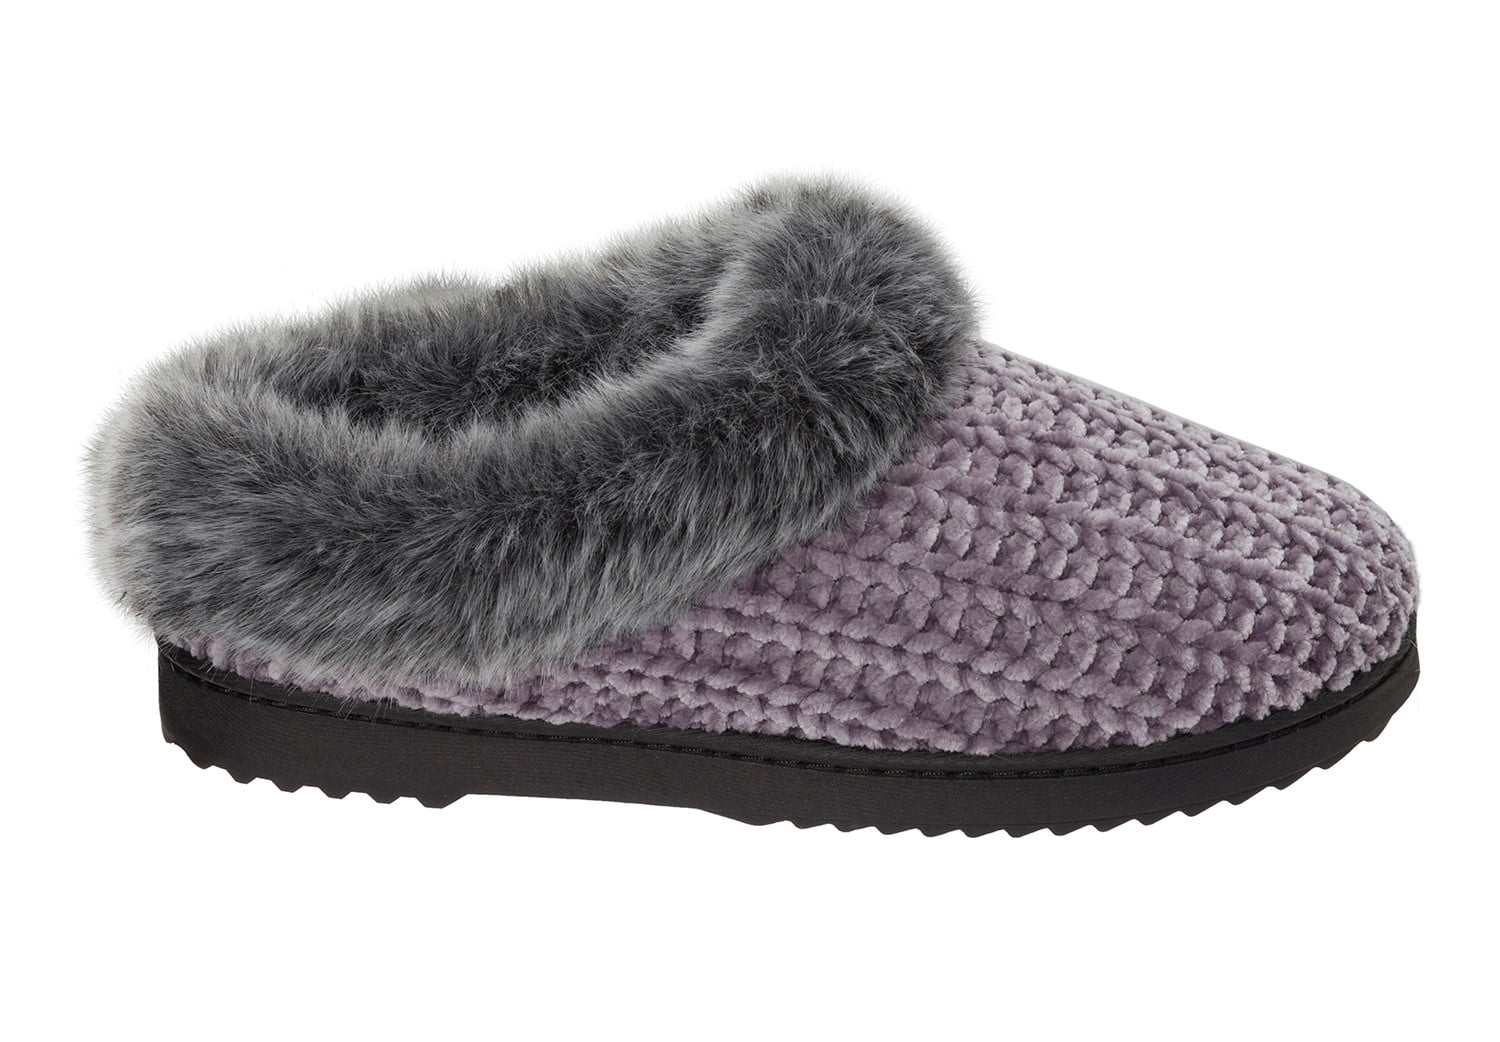 chenille slippers